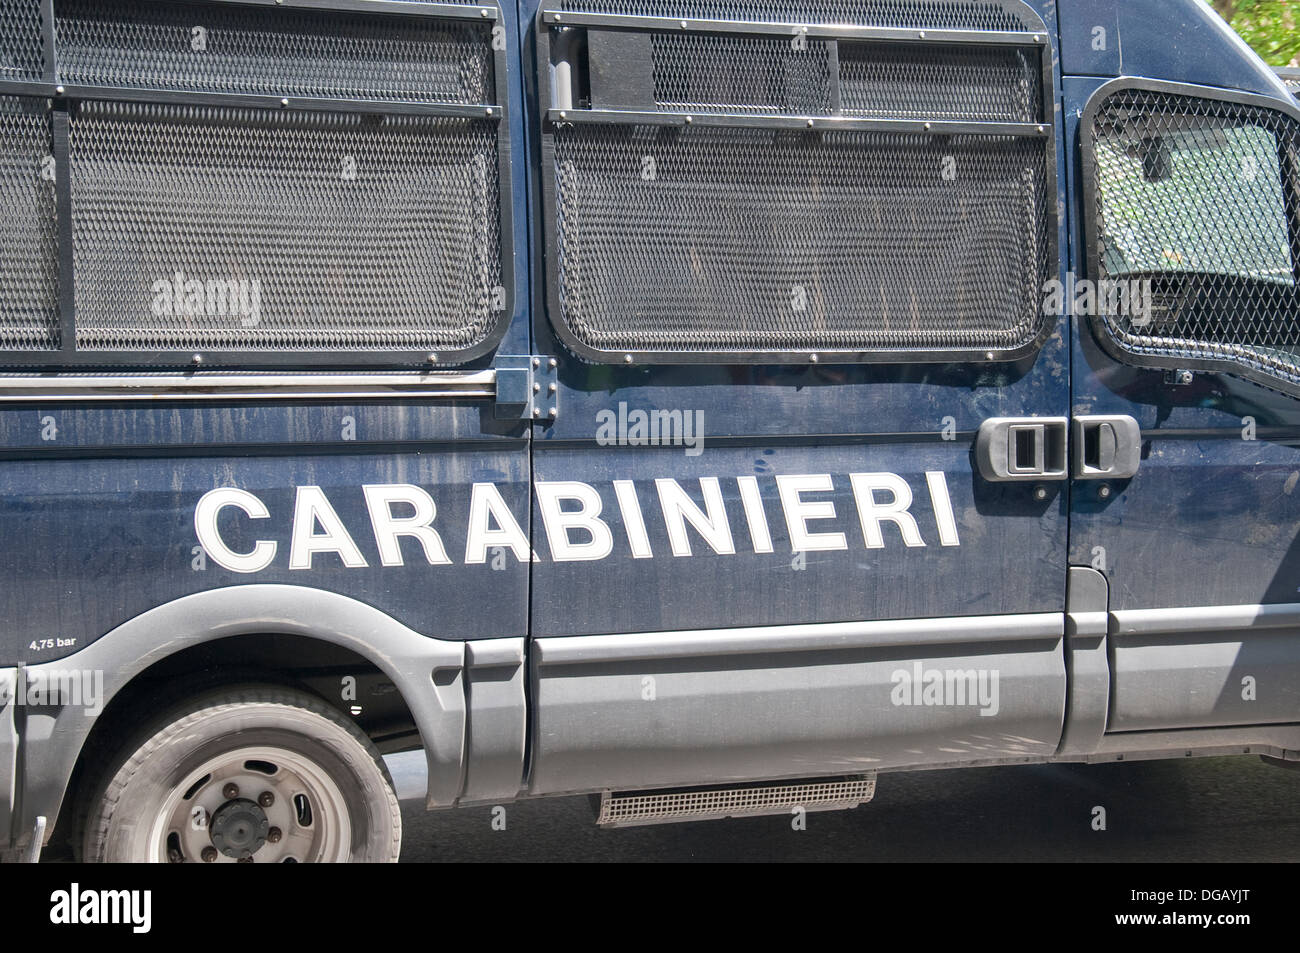 A Carabinieri van in central Rome Italy Stock Photo